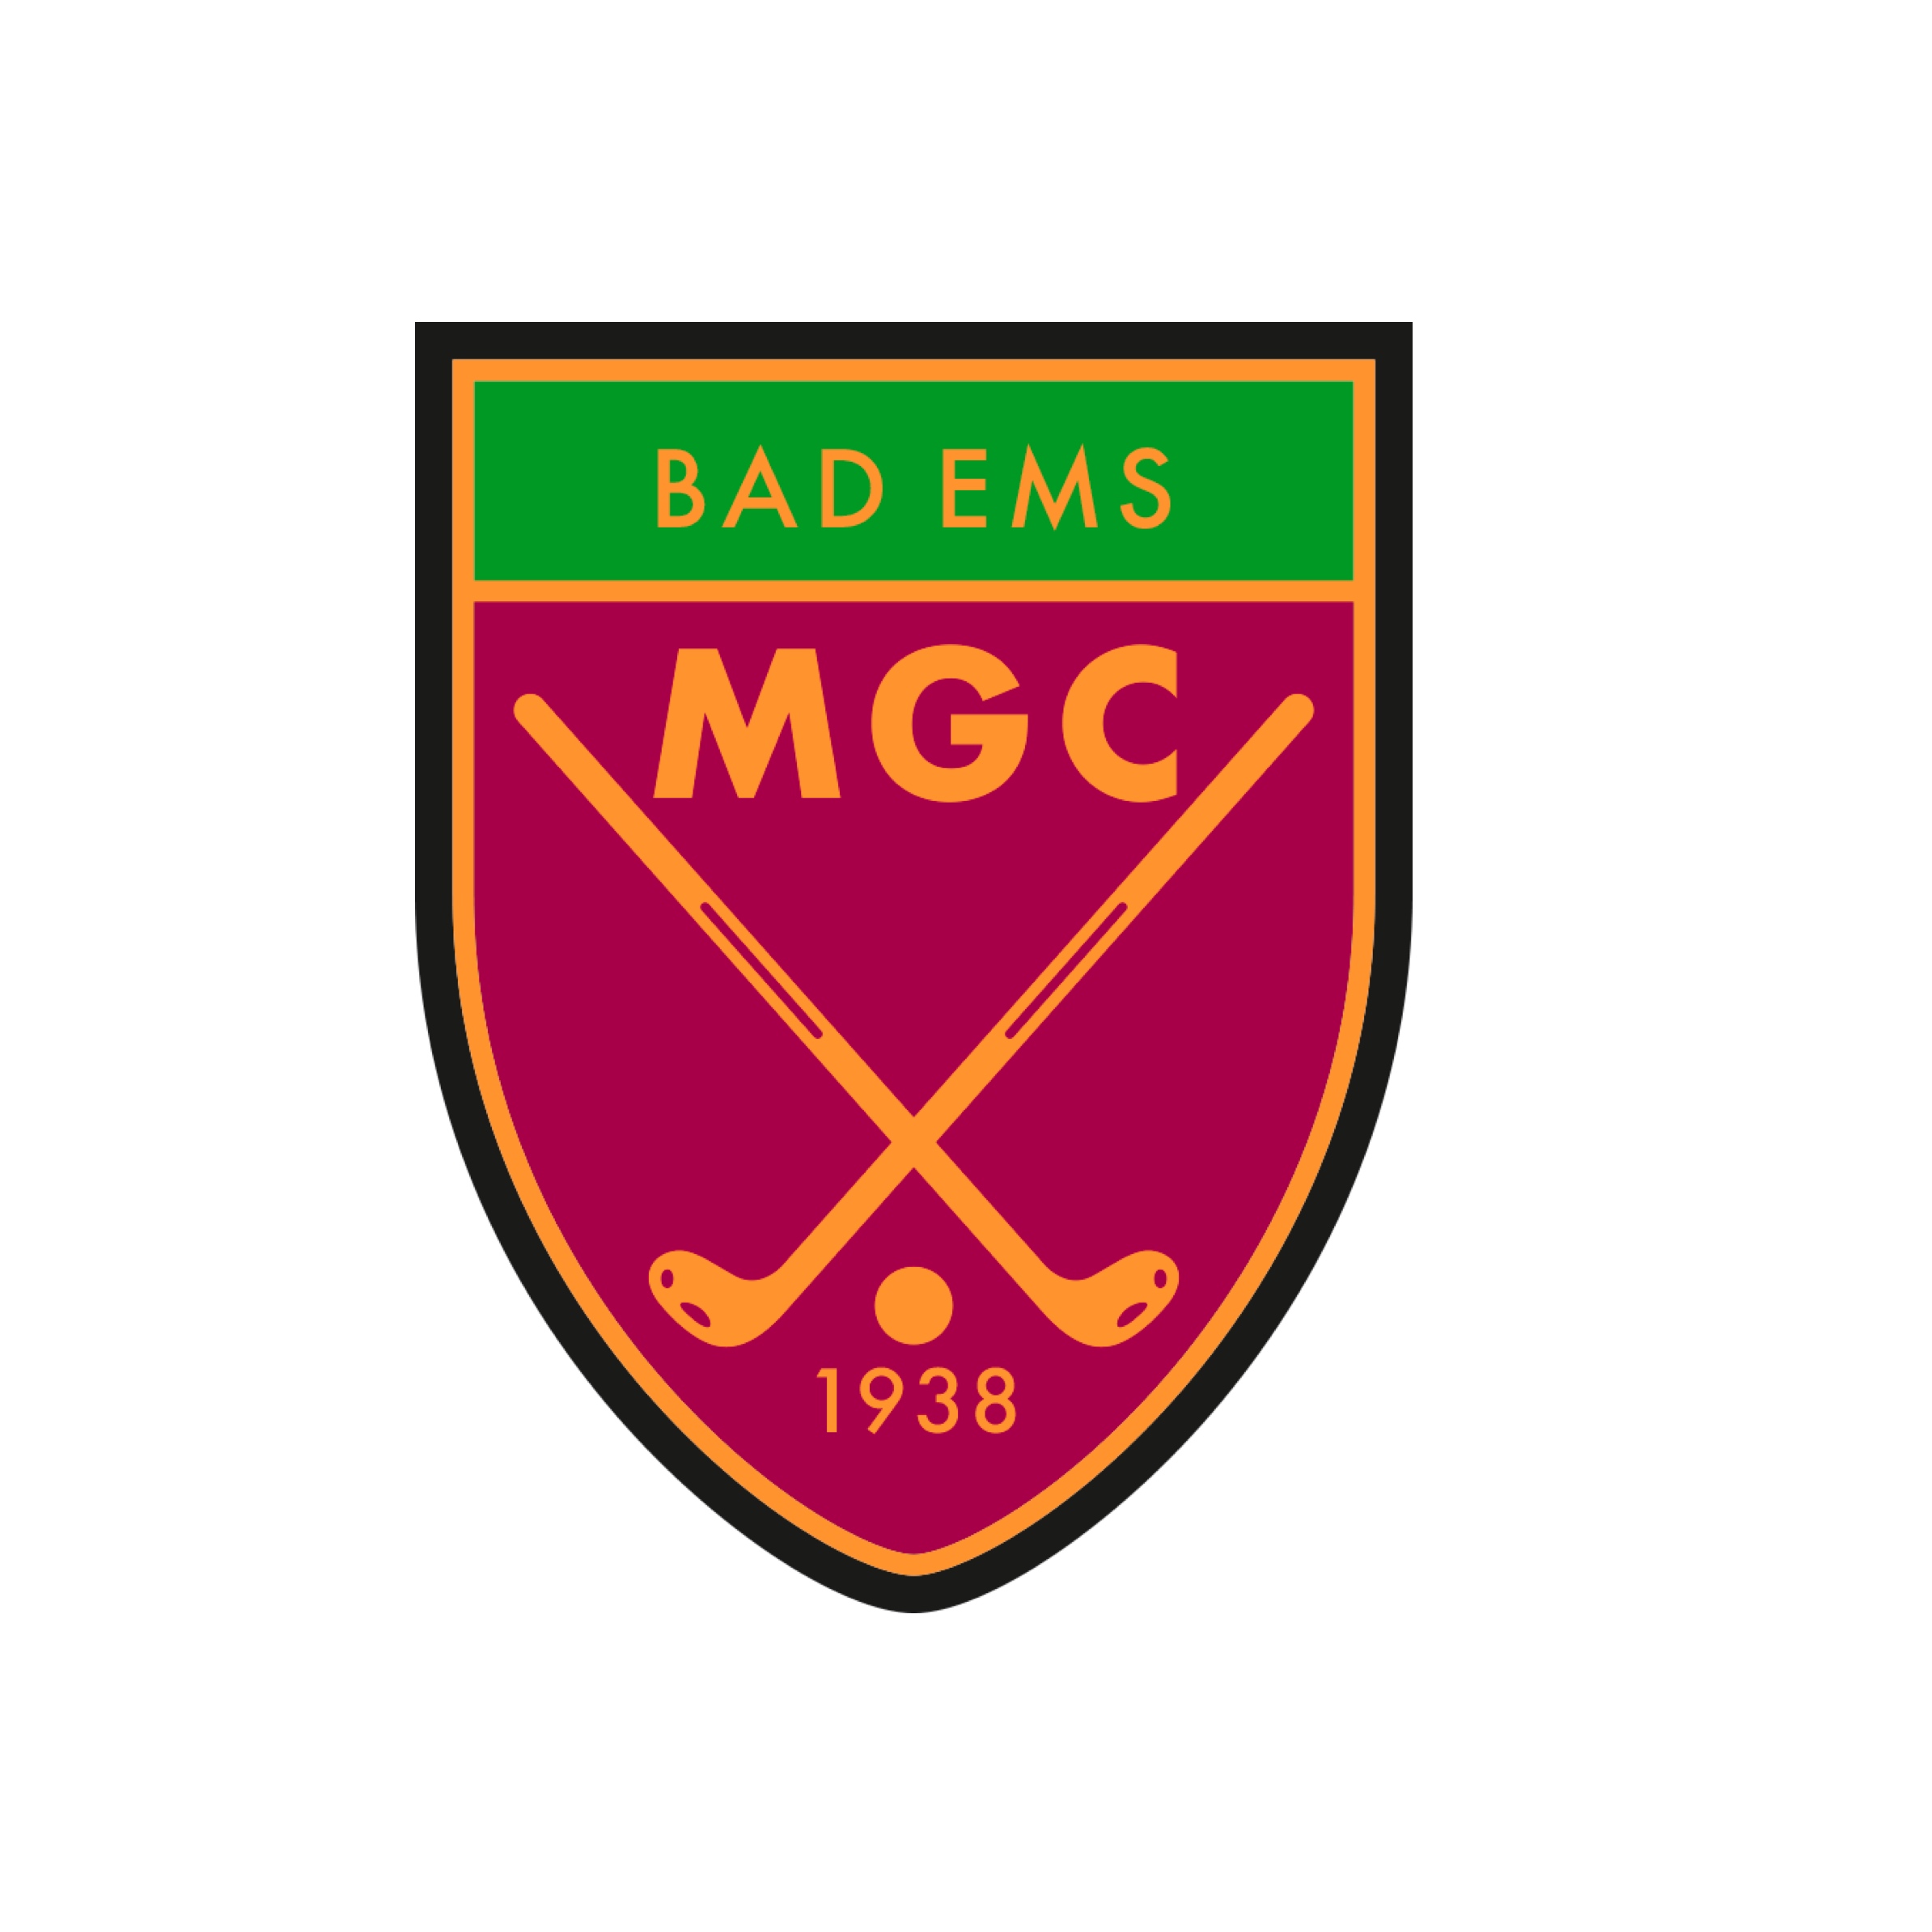 03. Bad Ems (Mittelrheinischer Golfclub Ems e.V)